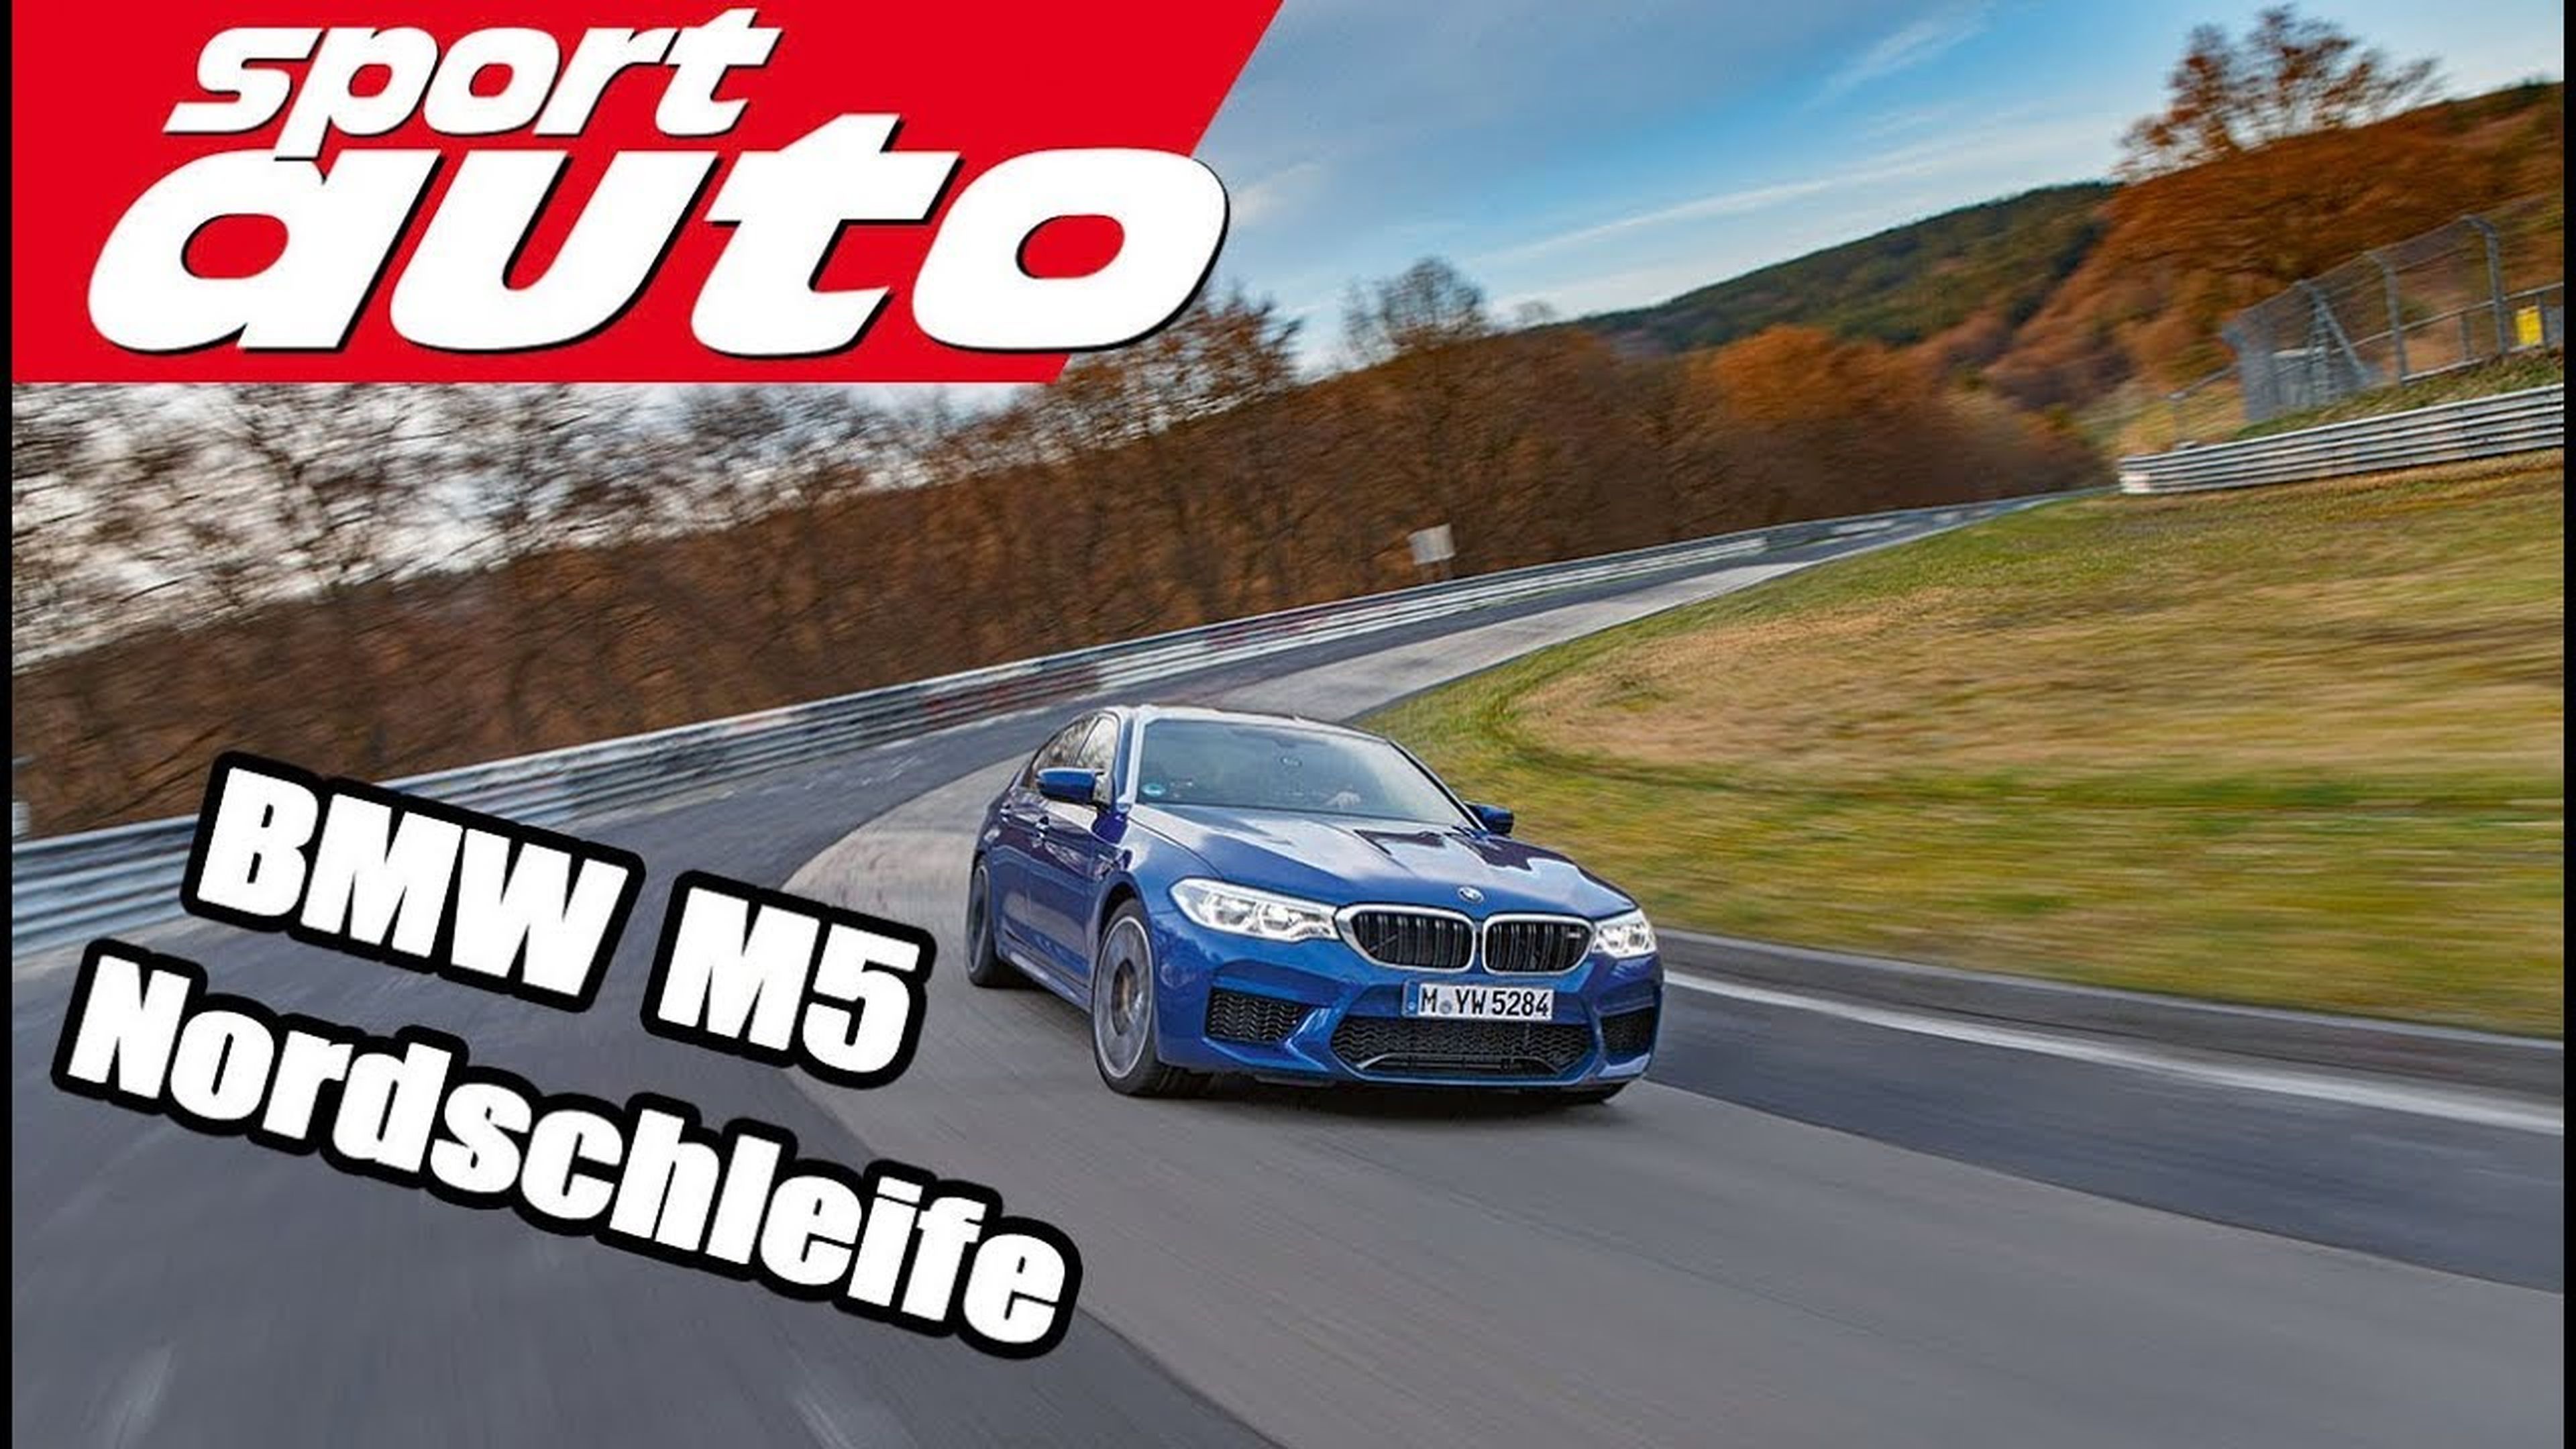 BMW M5 Nürburgring